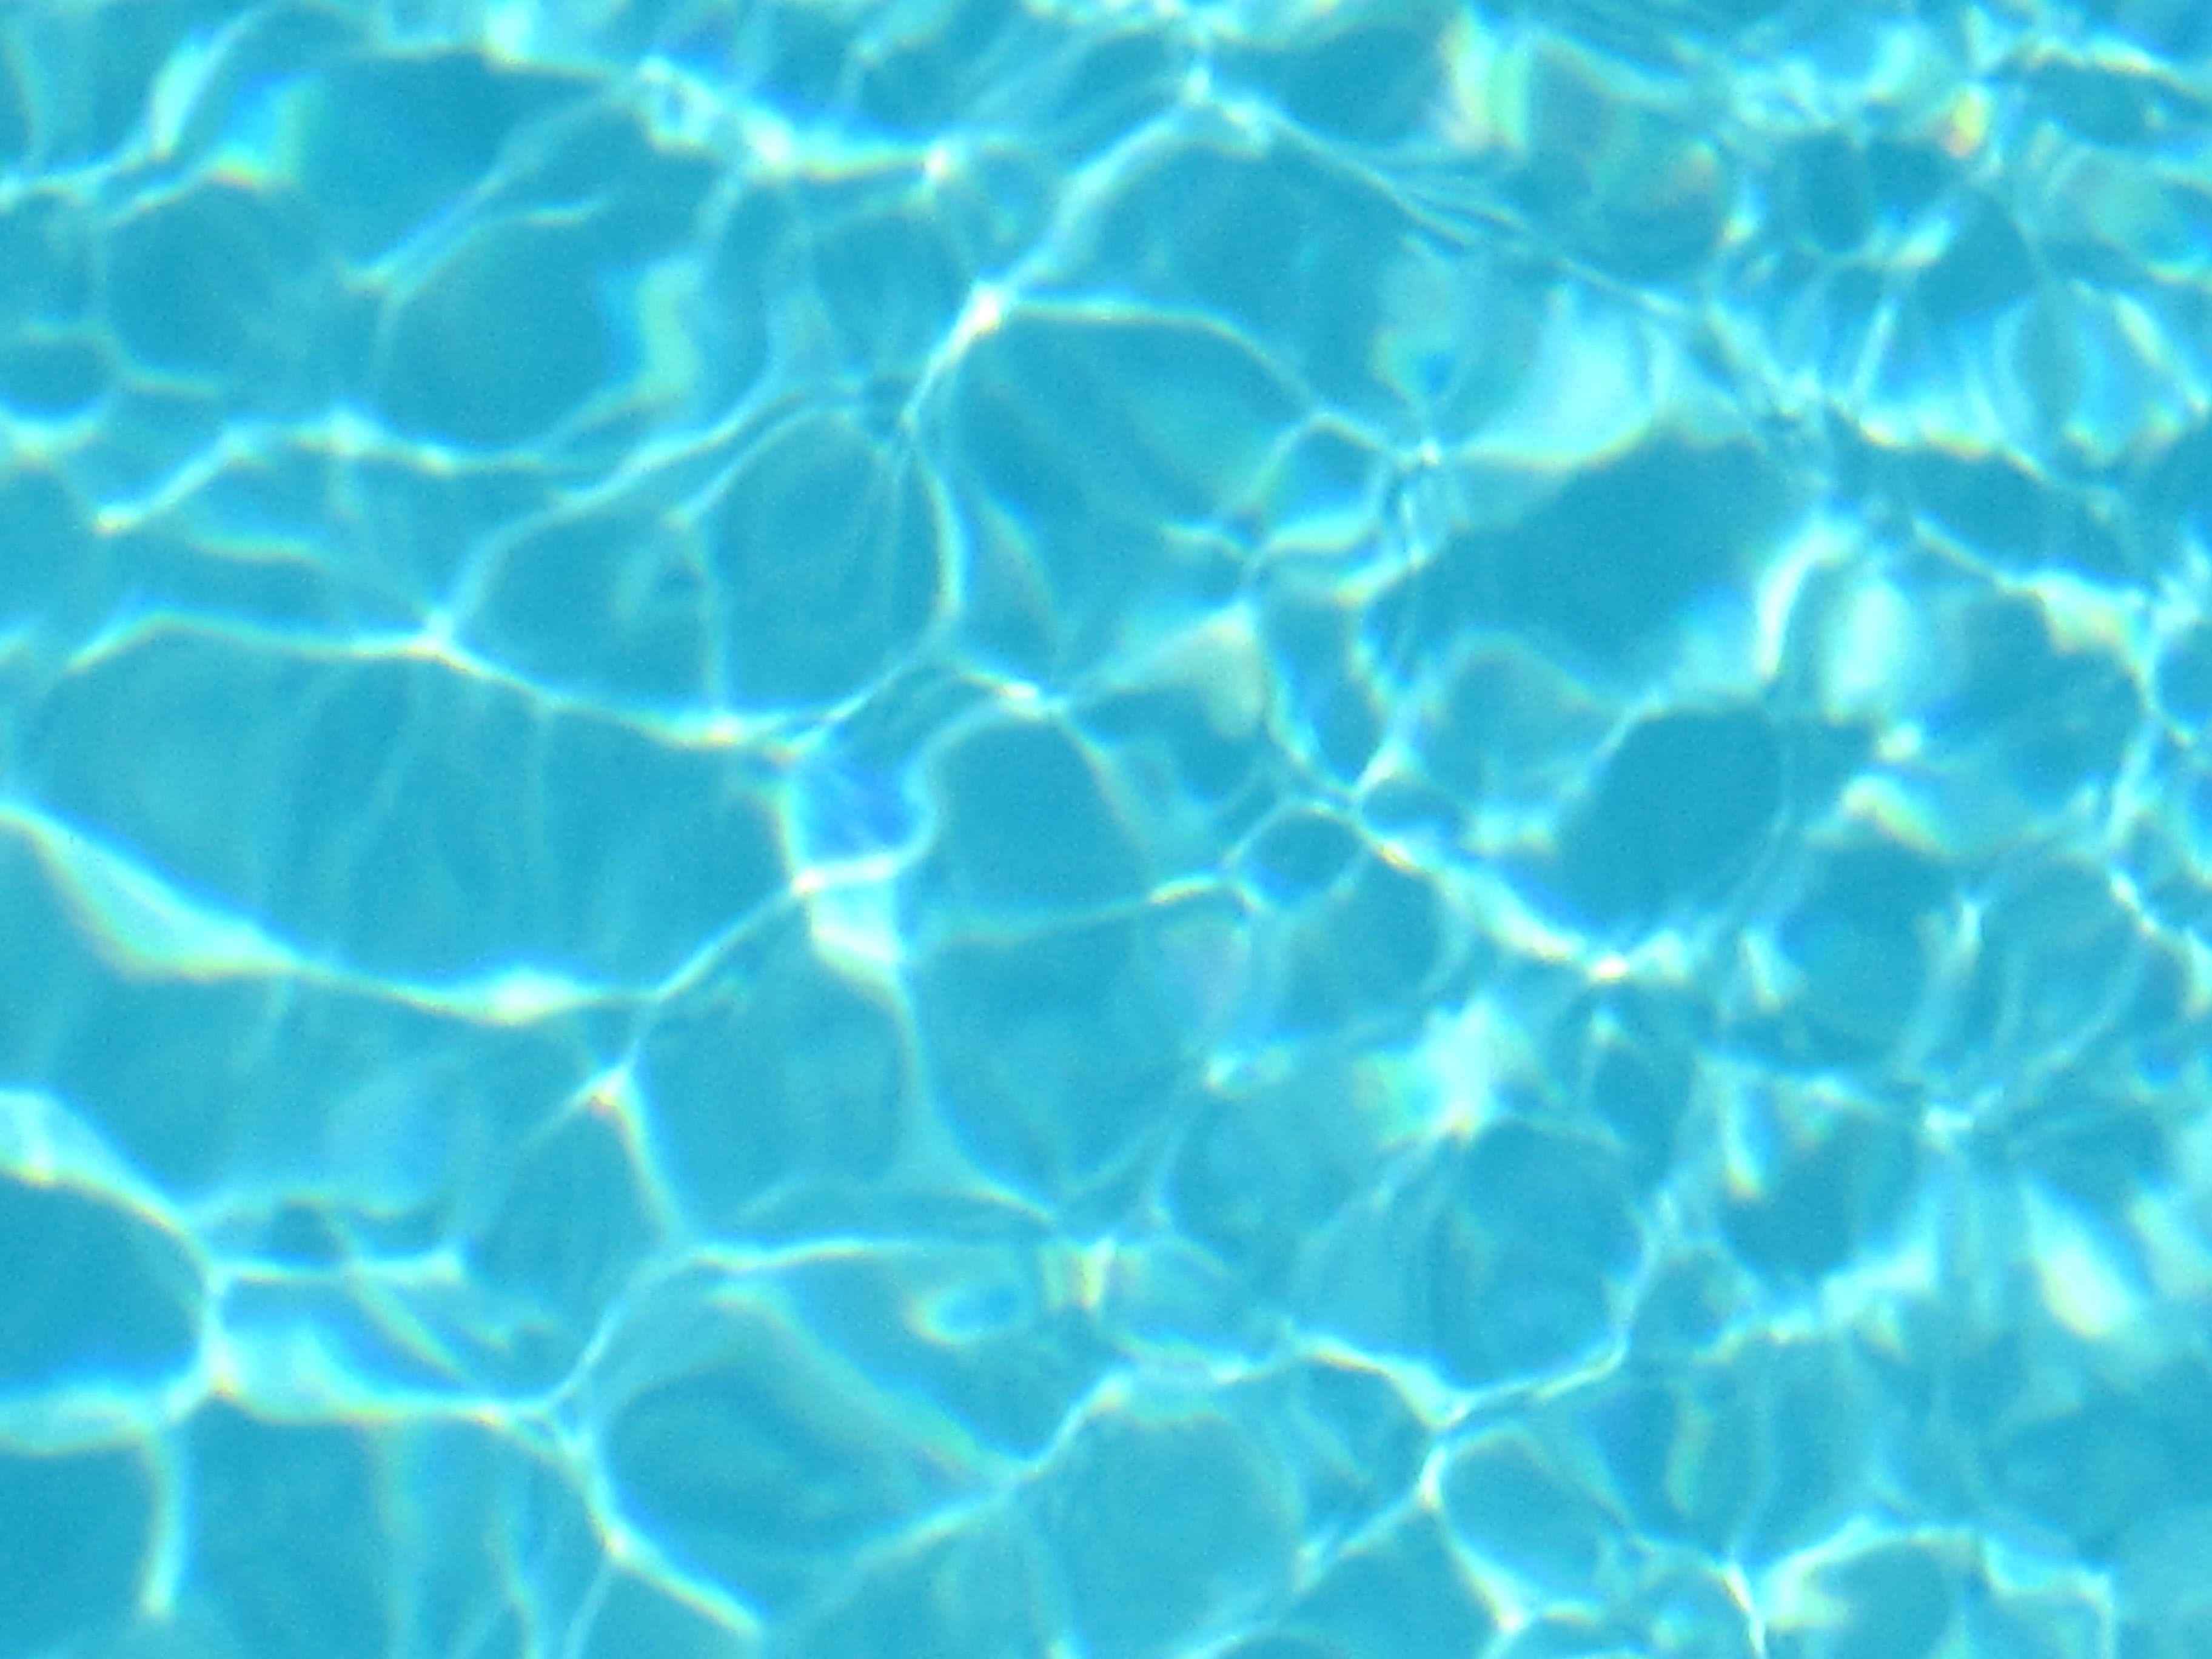 Water Pool Turquoise  Free photo on Pixabay  Pixabay